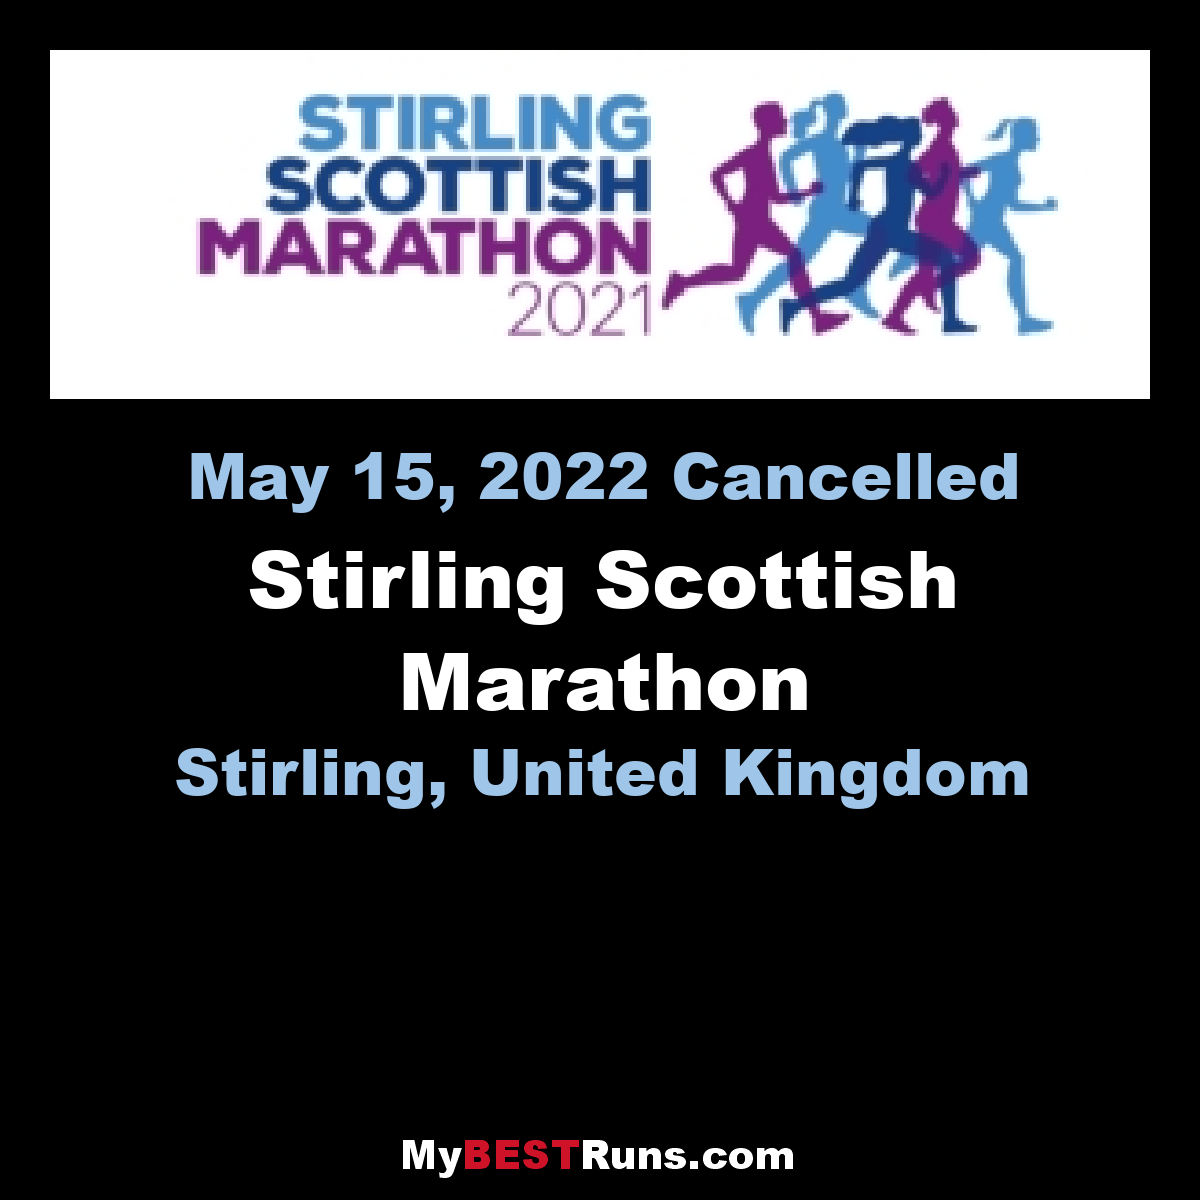 Stirling Scottish Marathon